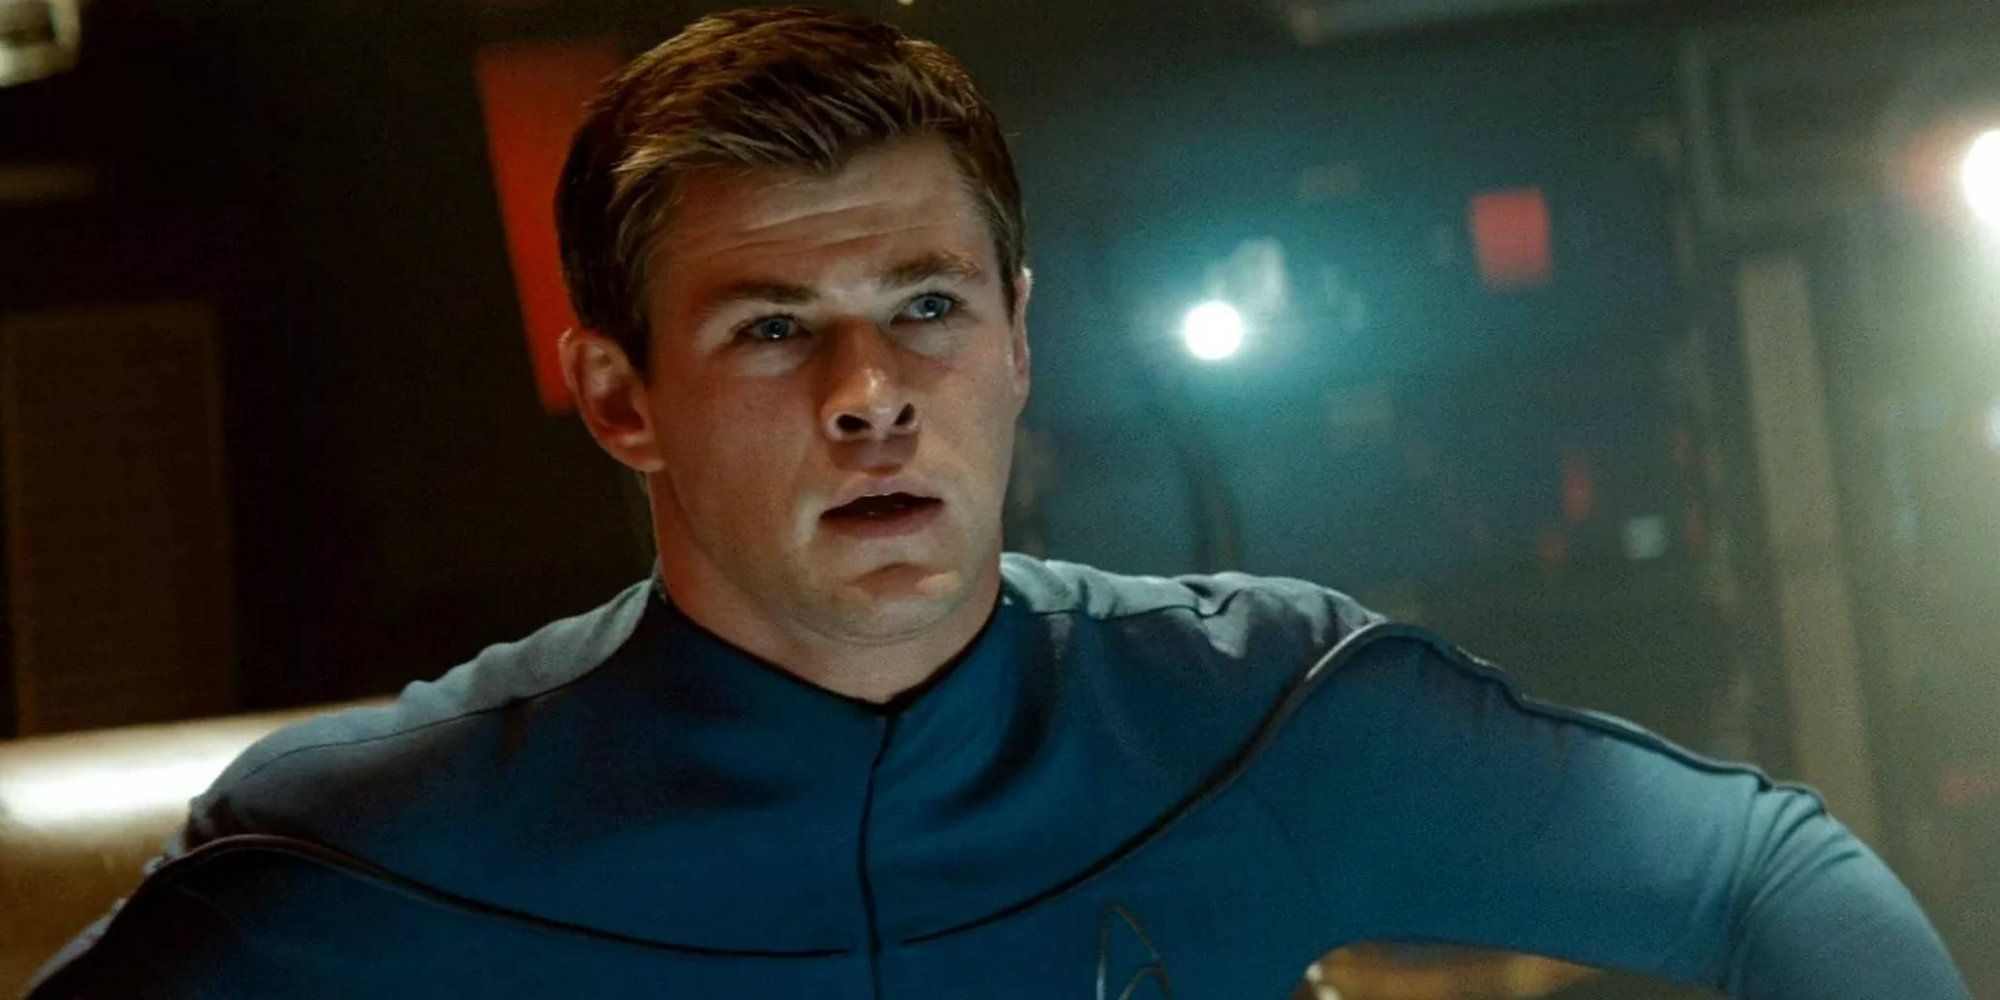 Chris Hemsworth Turned Down Star Trek 4 Because of the Script